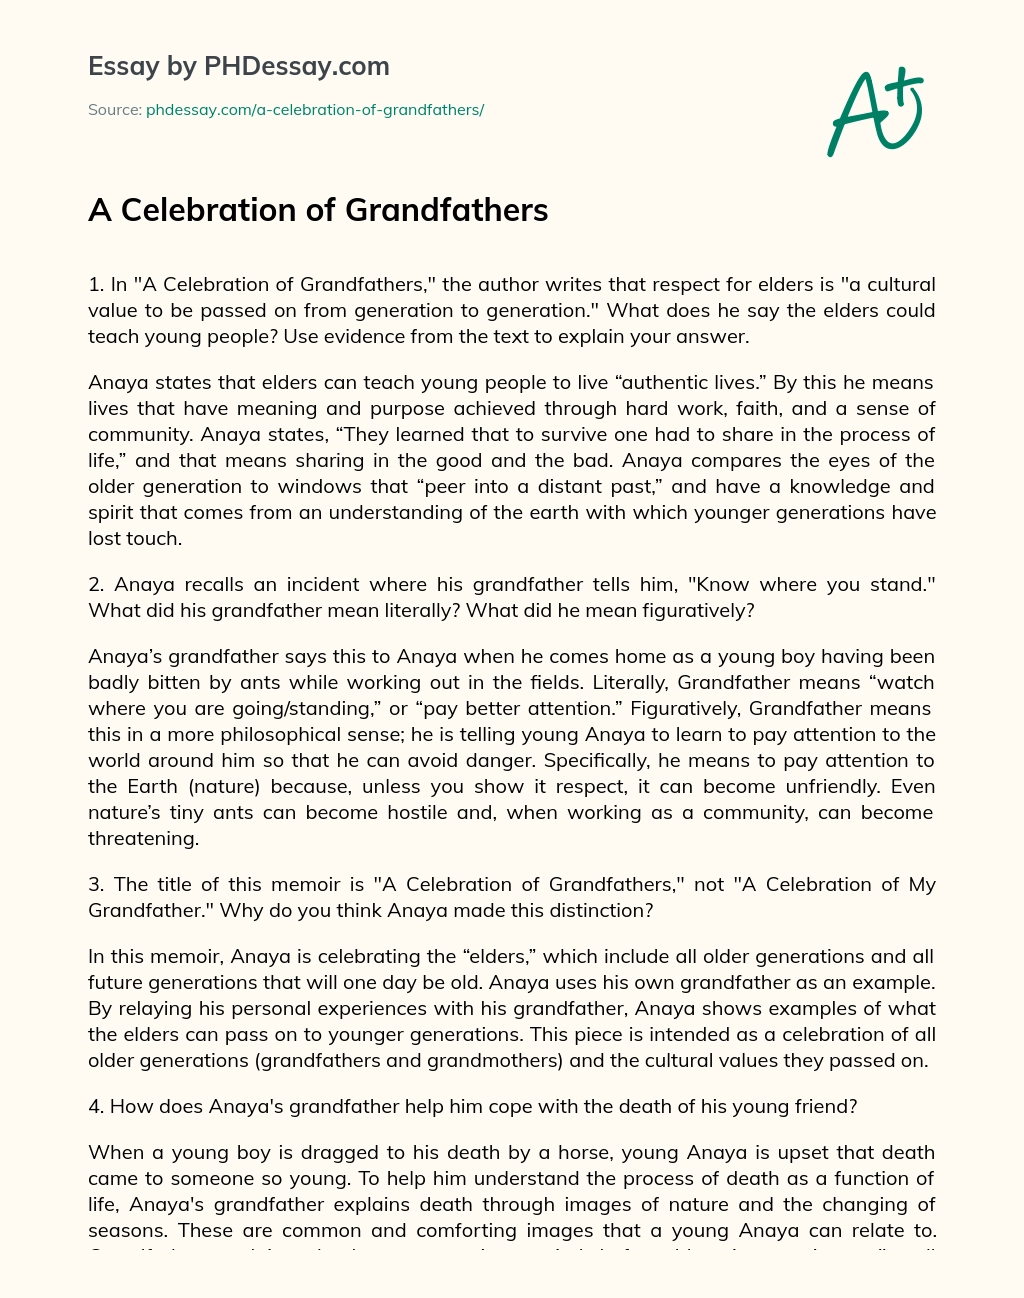 A Celebration of Grandfathers essay